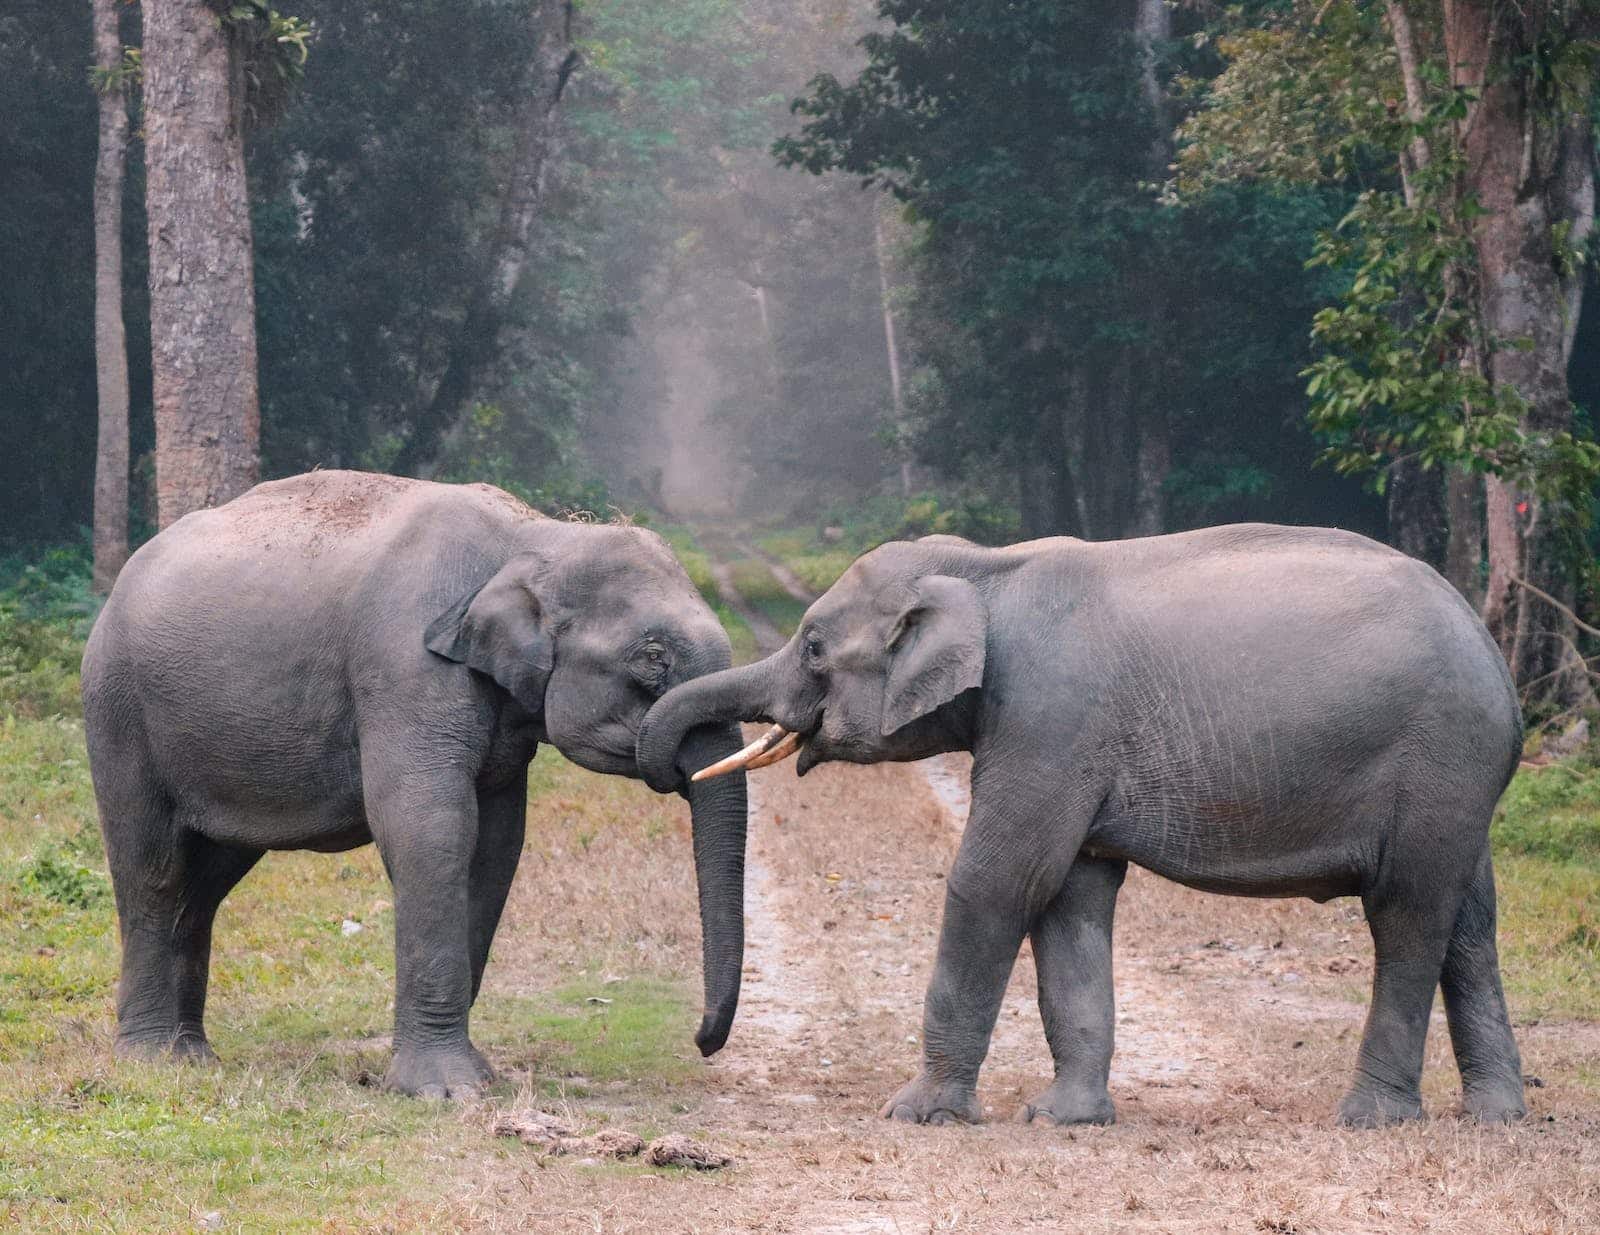 Two large elephants